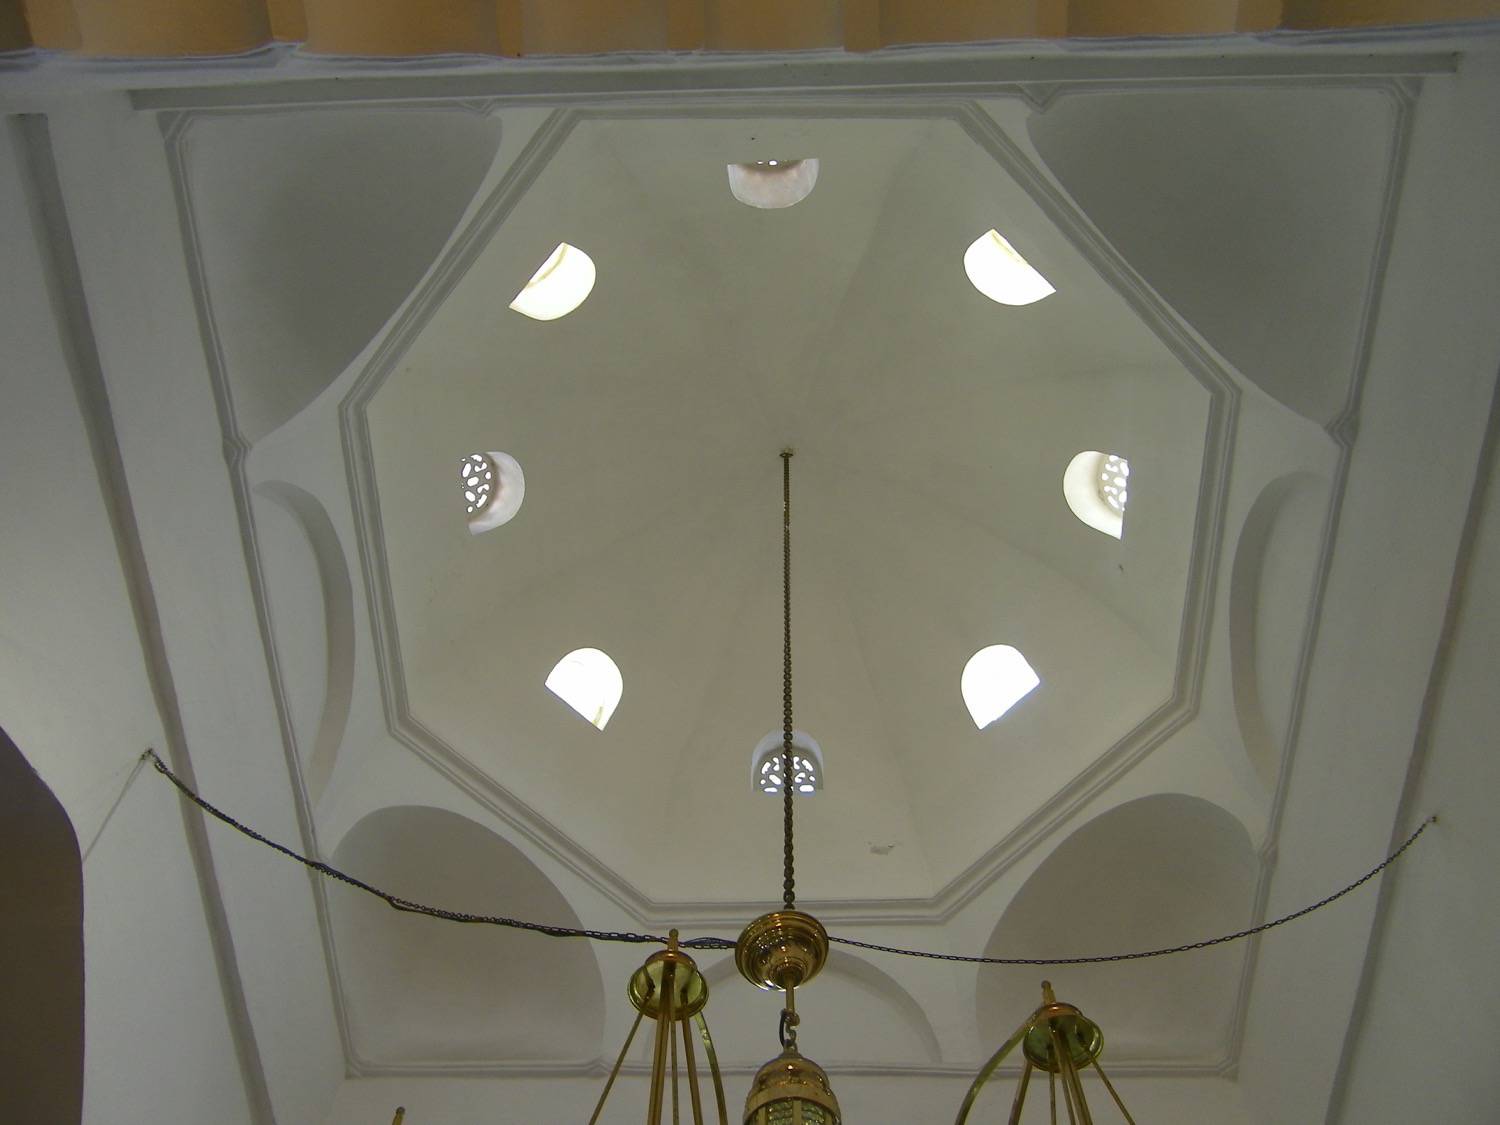 Jami' al-Kabir (Algiers) - Upward view toward the dome of the prayer hall